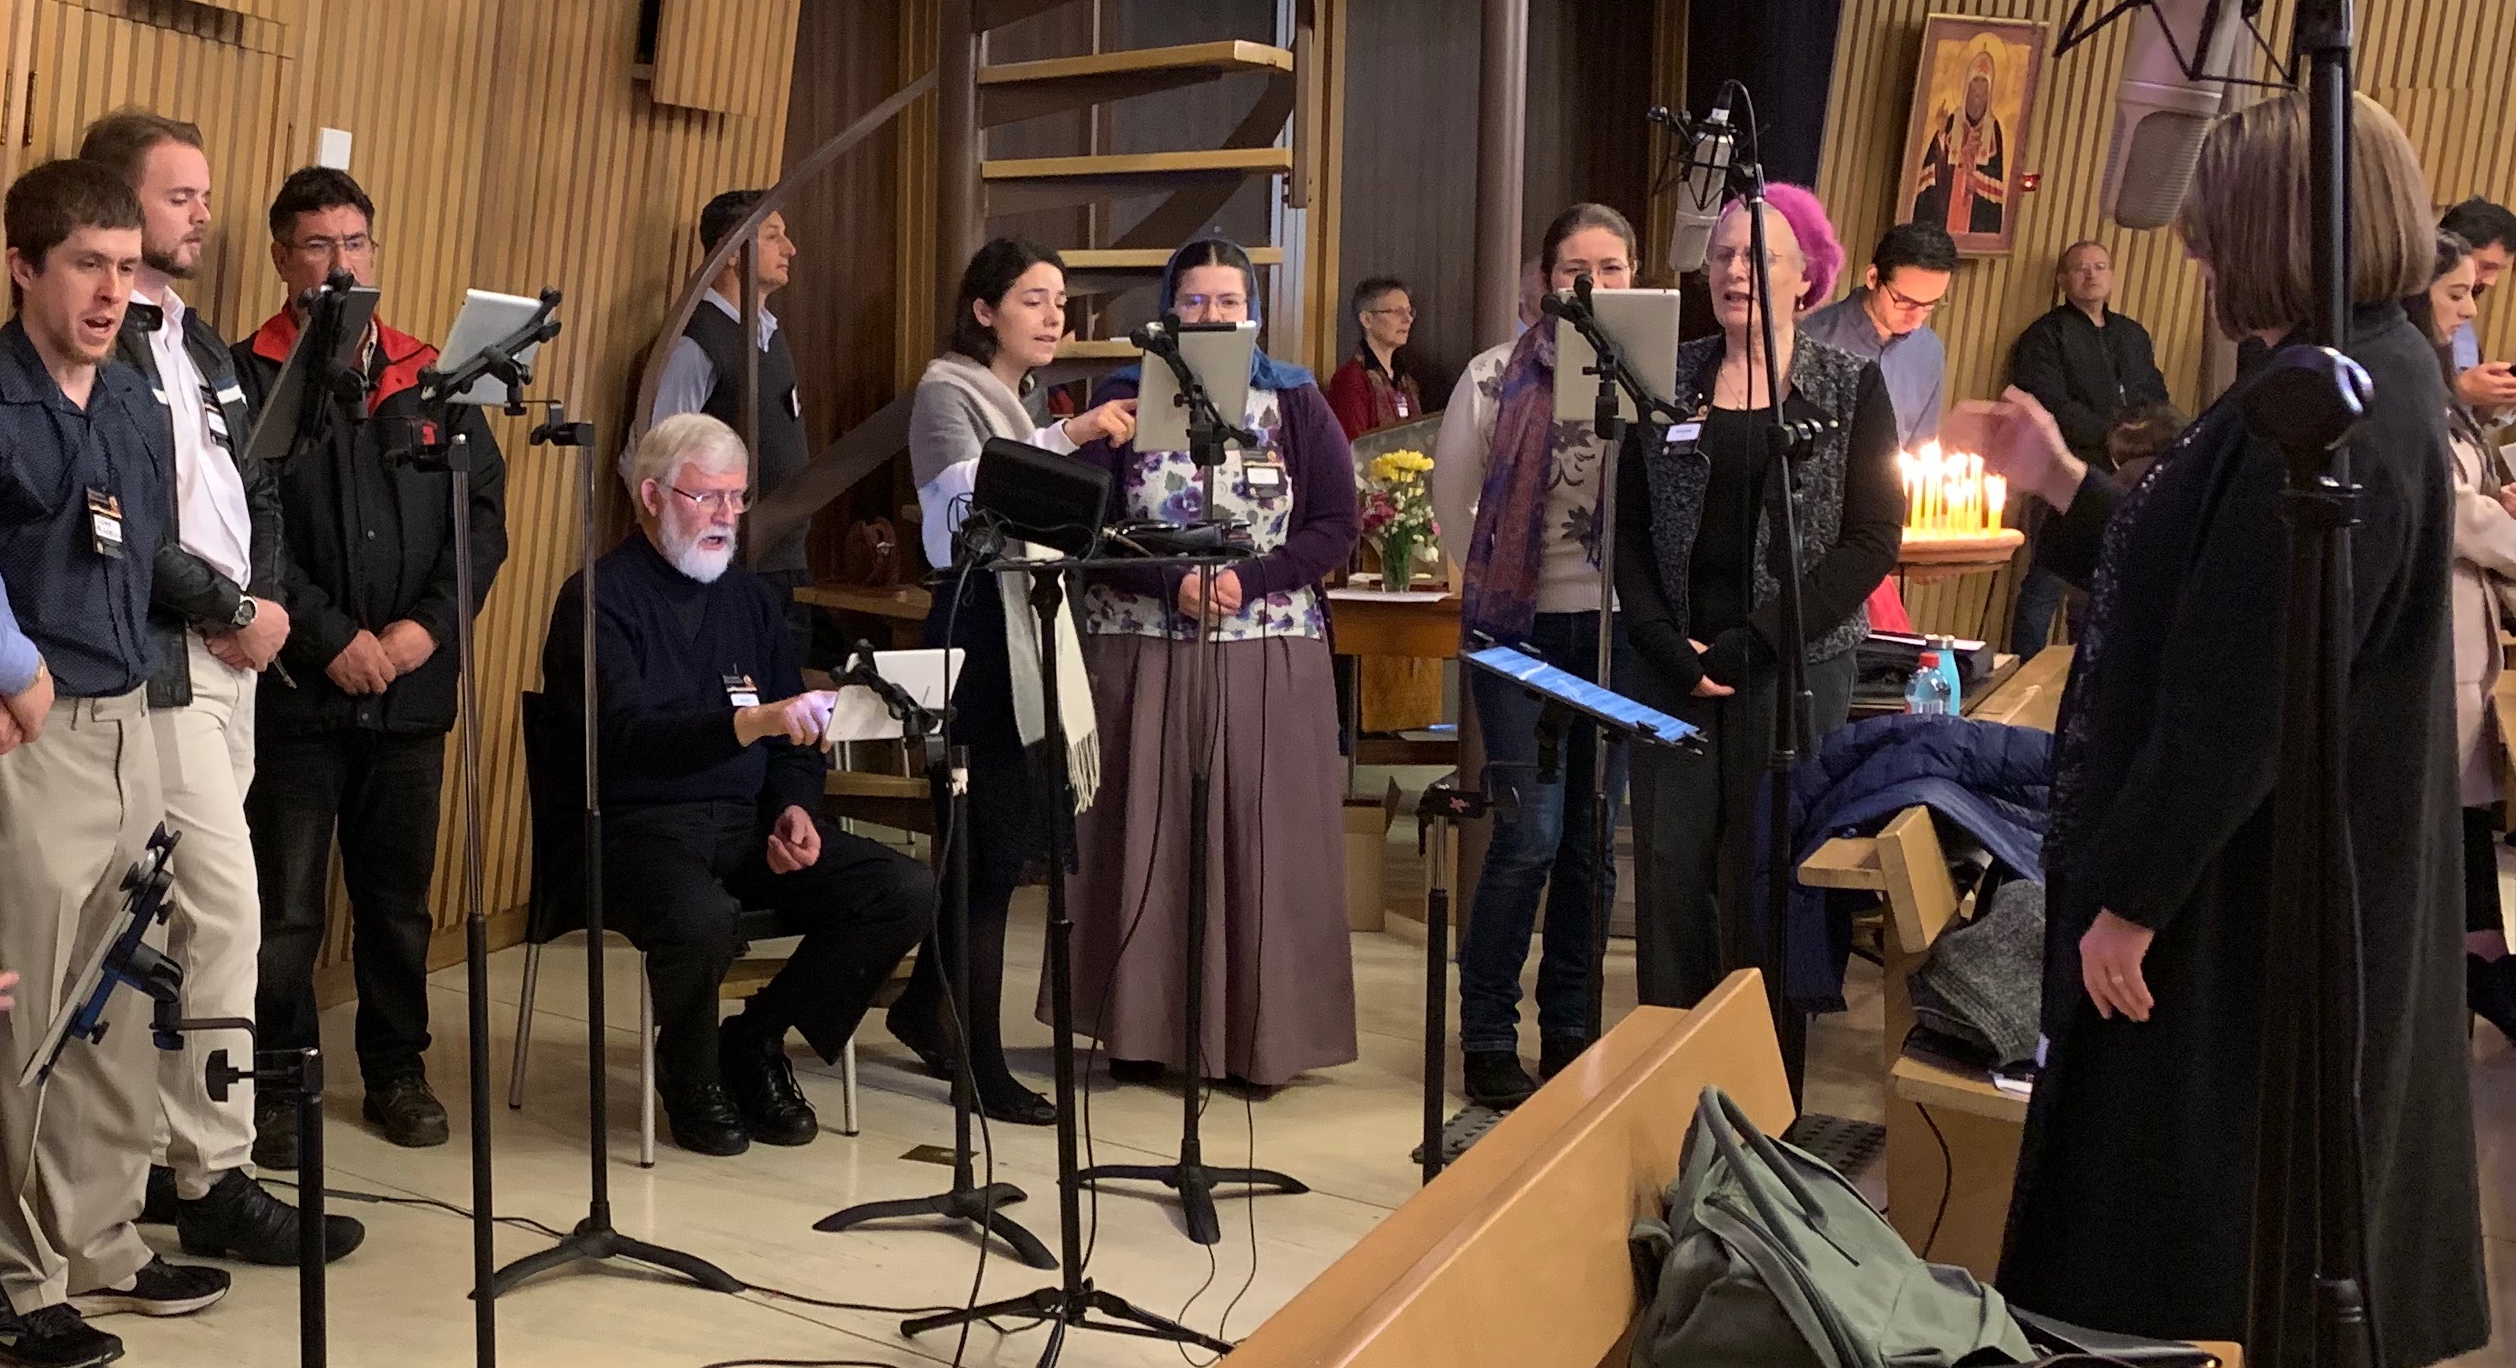 The Good Shepherd Choir at Exploring Orthodoxy 2019